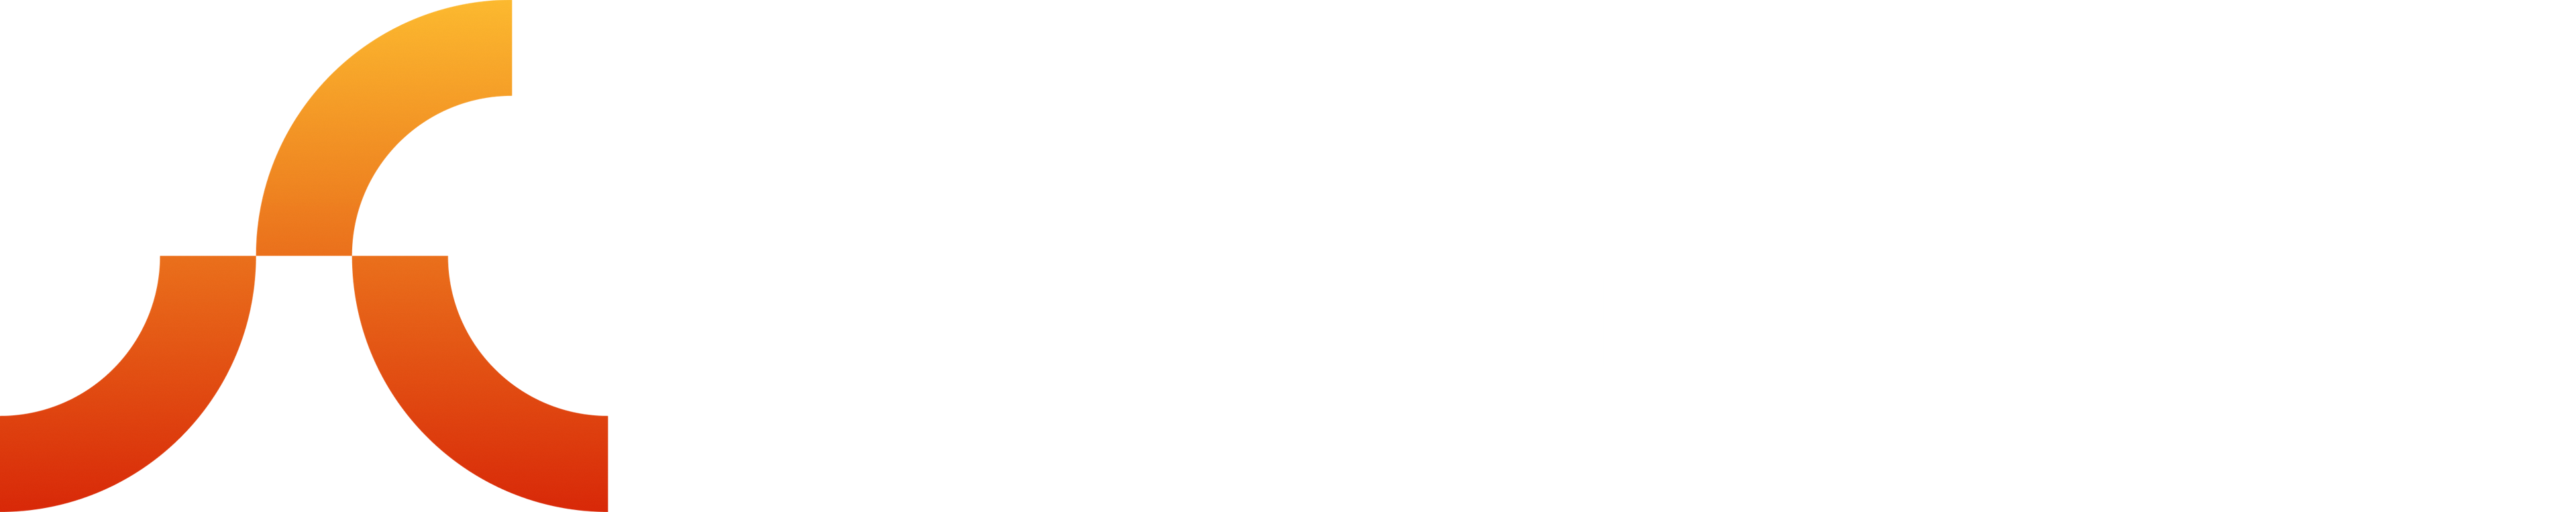 Vulcanic Labs Logo